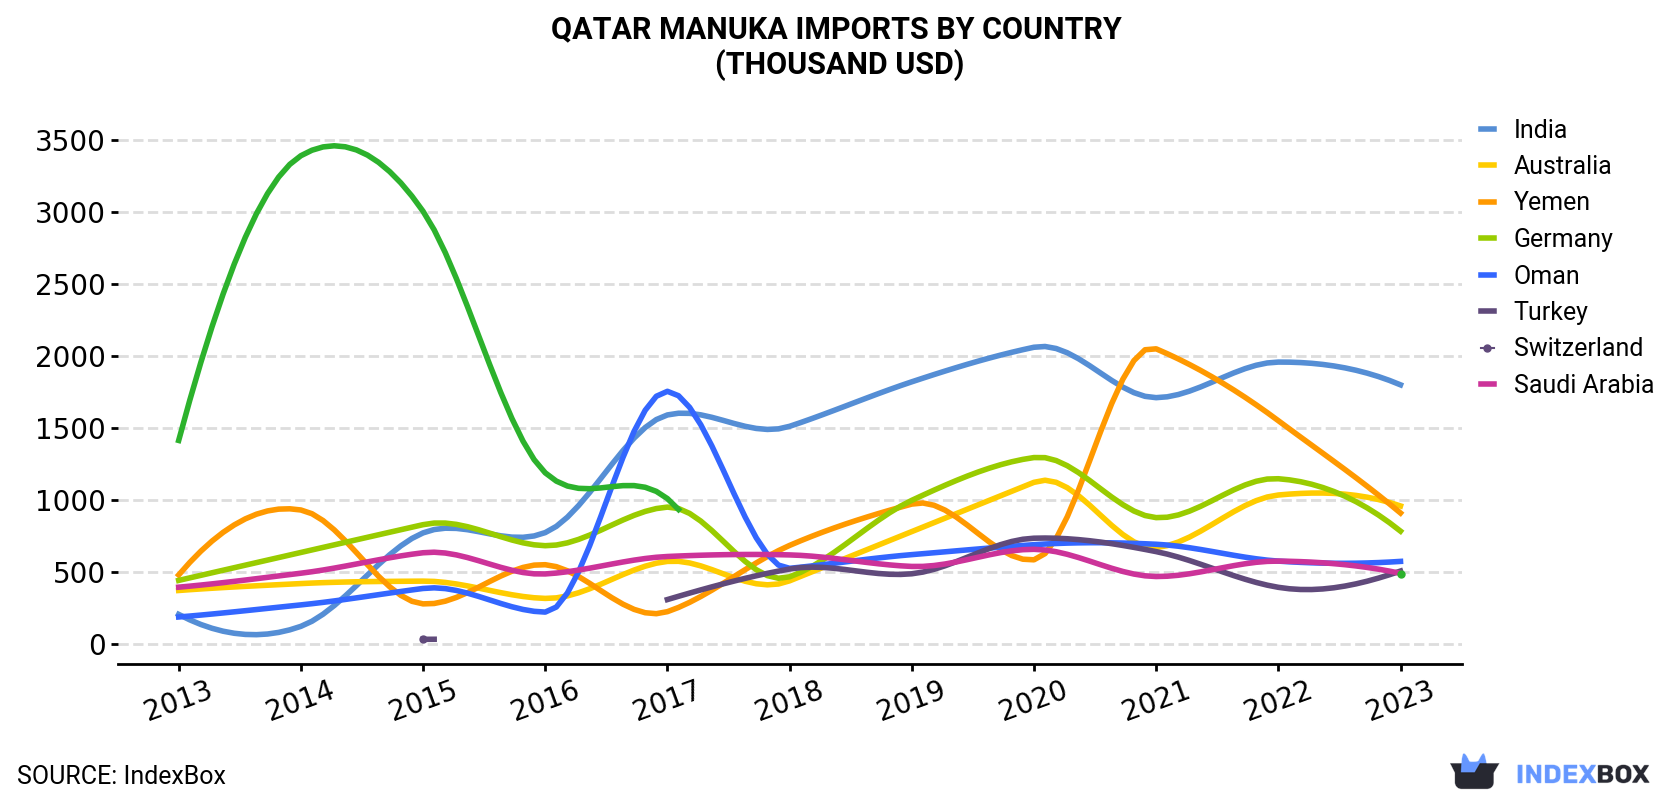 Qatar Manuka Imports By Country (Thousand USD)